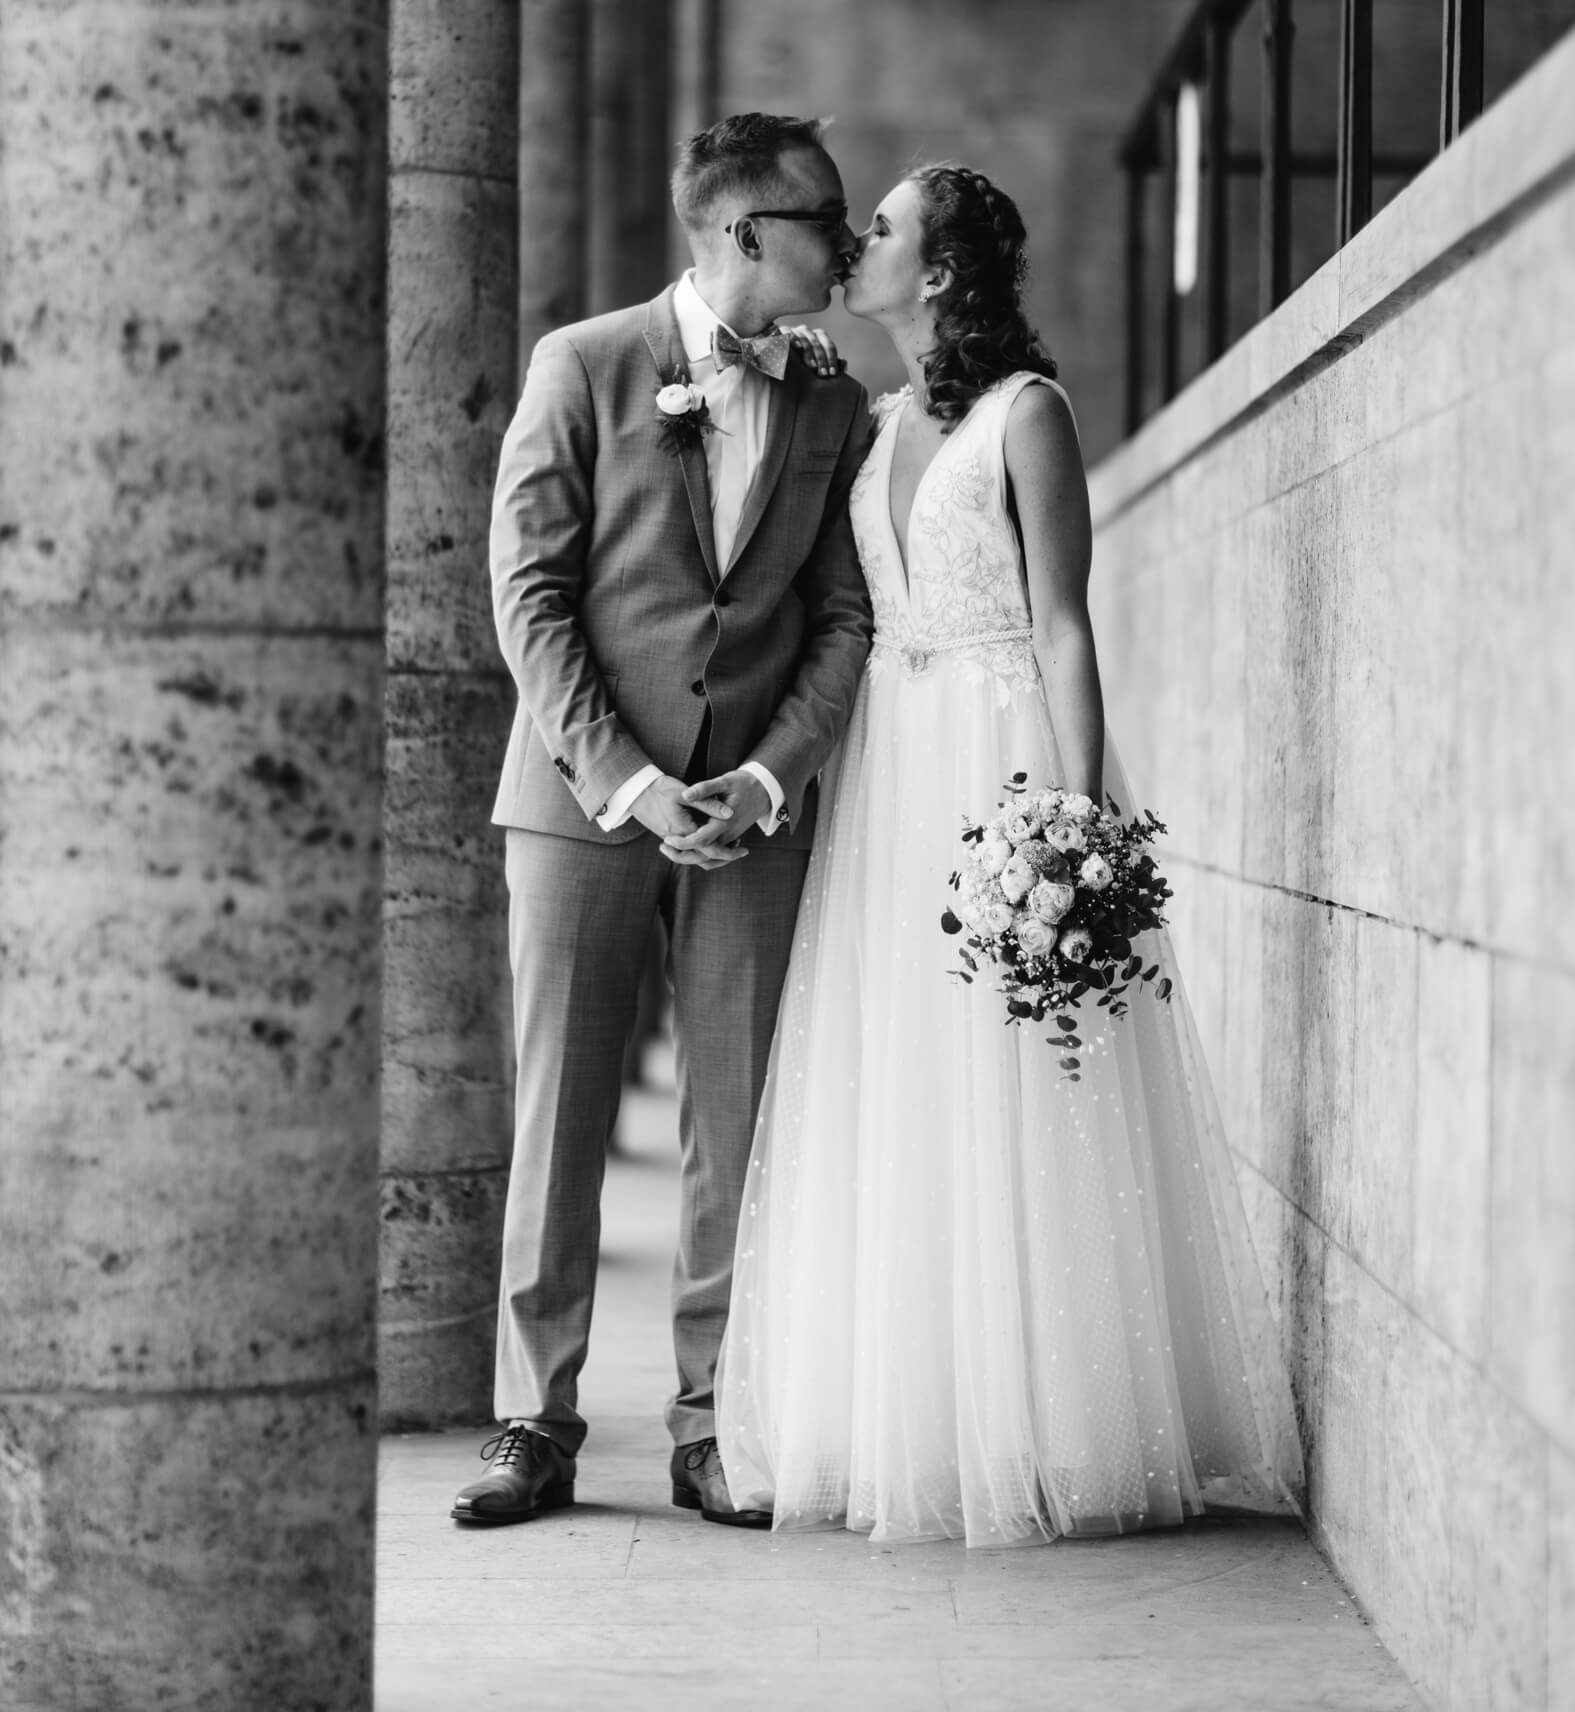 Wedding-Update-Our-Bridal-Couple-Shooting-Part-One-kationette-lifestyleblogger-nrw-weddingday-2018